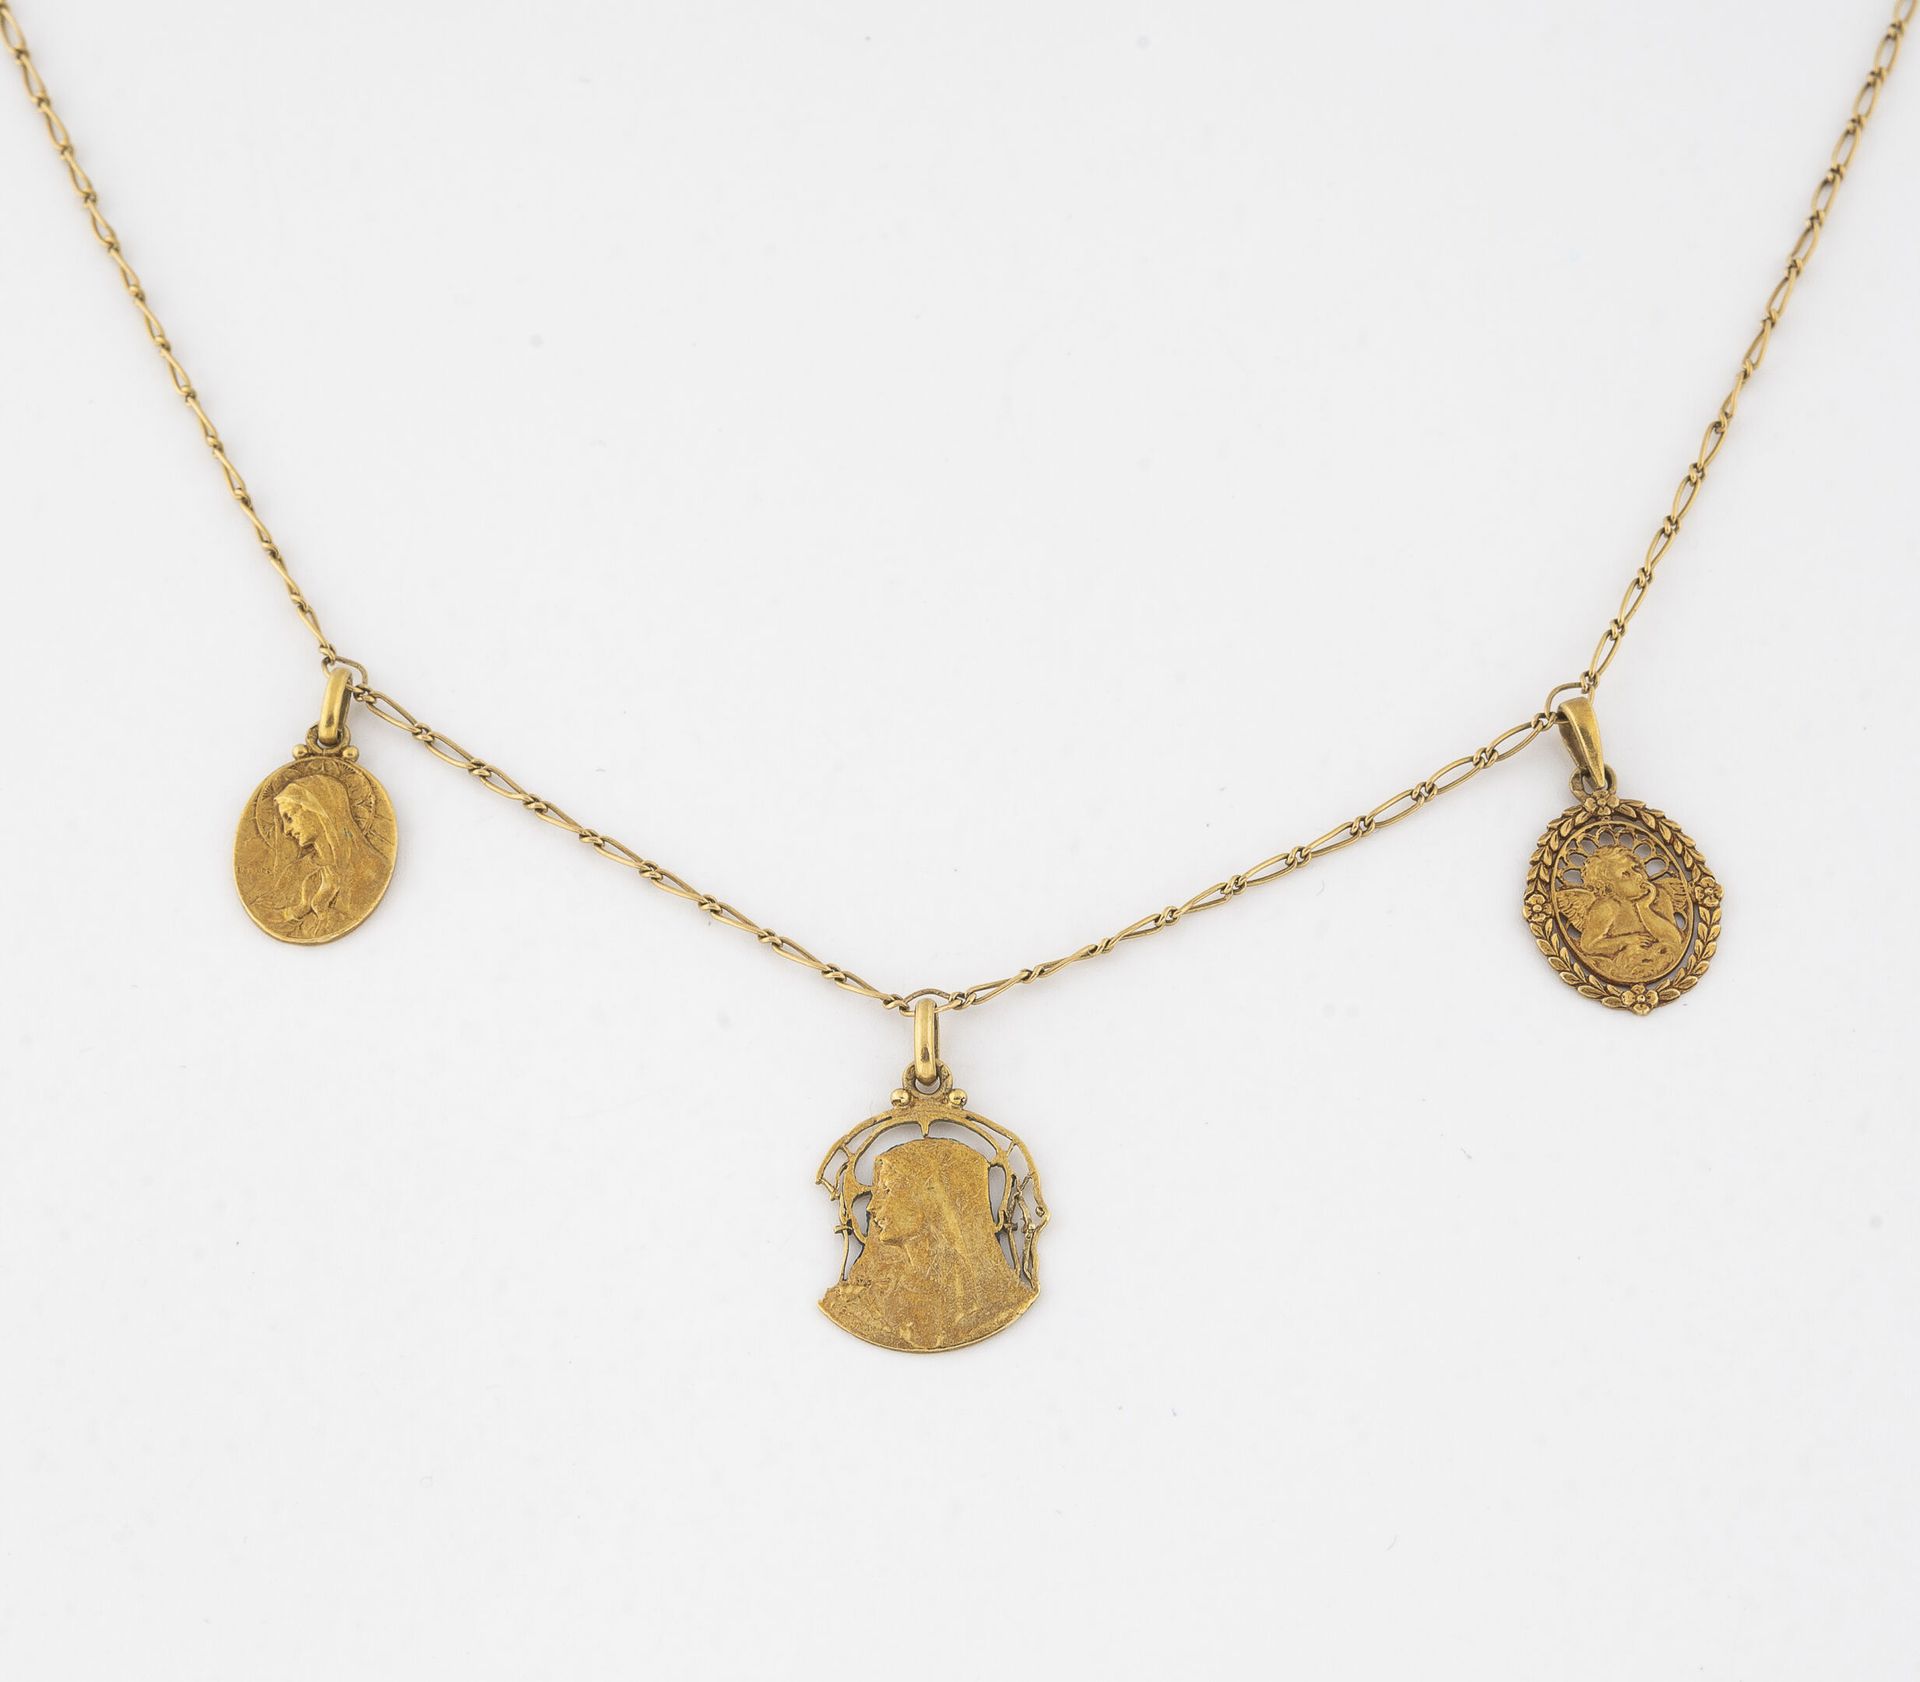 Null 黄金（750）颈链，有花纹缝制，装有三枚宗教奖章。

弹簧环扣。

反面有刻字或日期。

重量：8.4克。- 长度：45厘米。

钮扣有待修订。